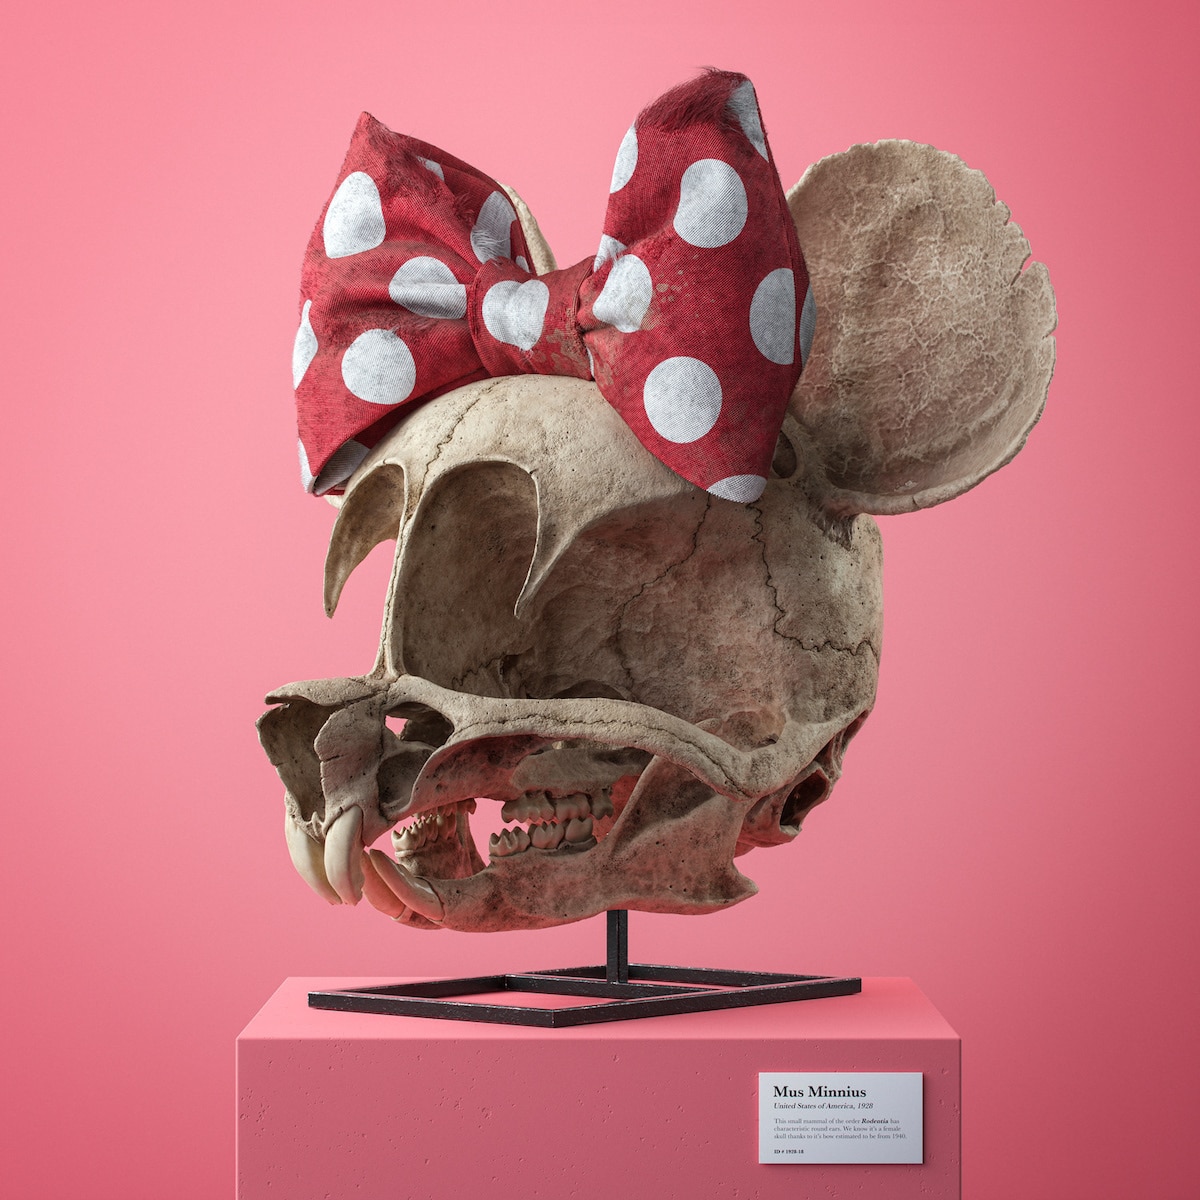 3D Art of Minnie Mouse by Filip Hodas